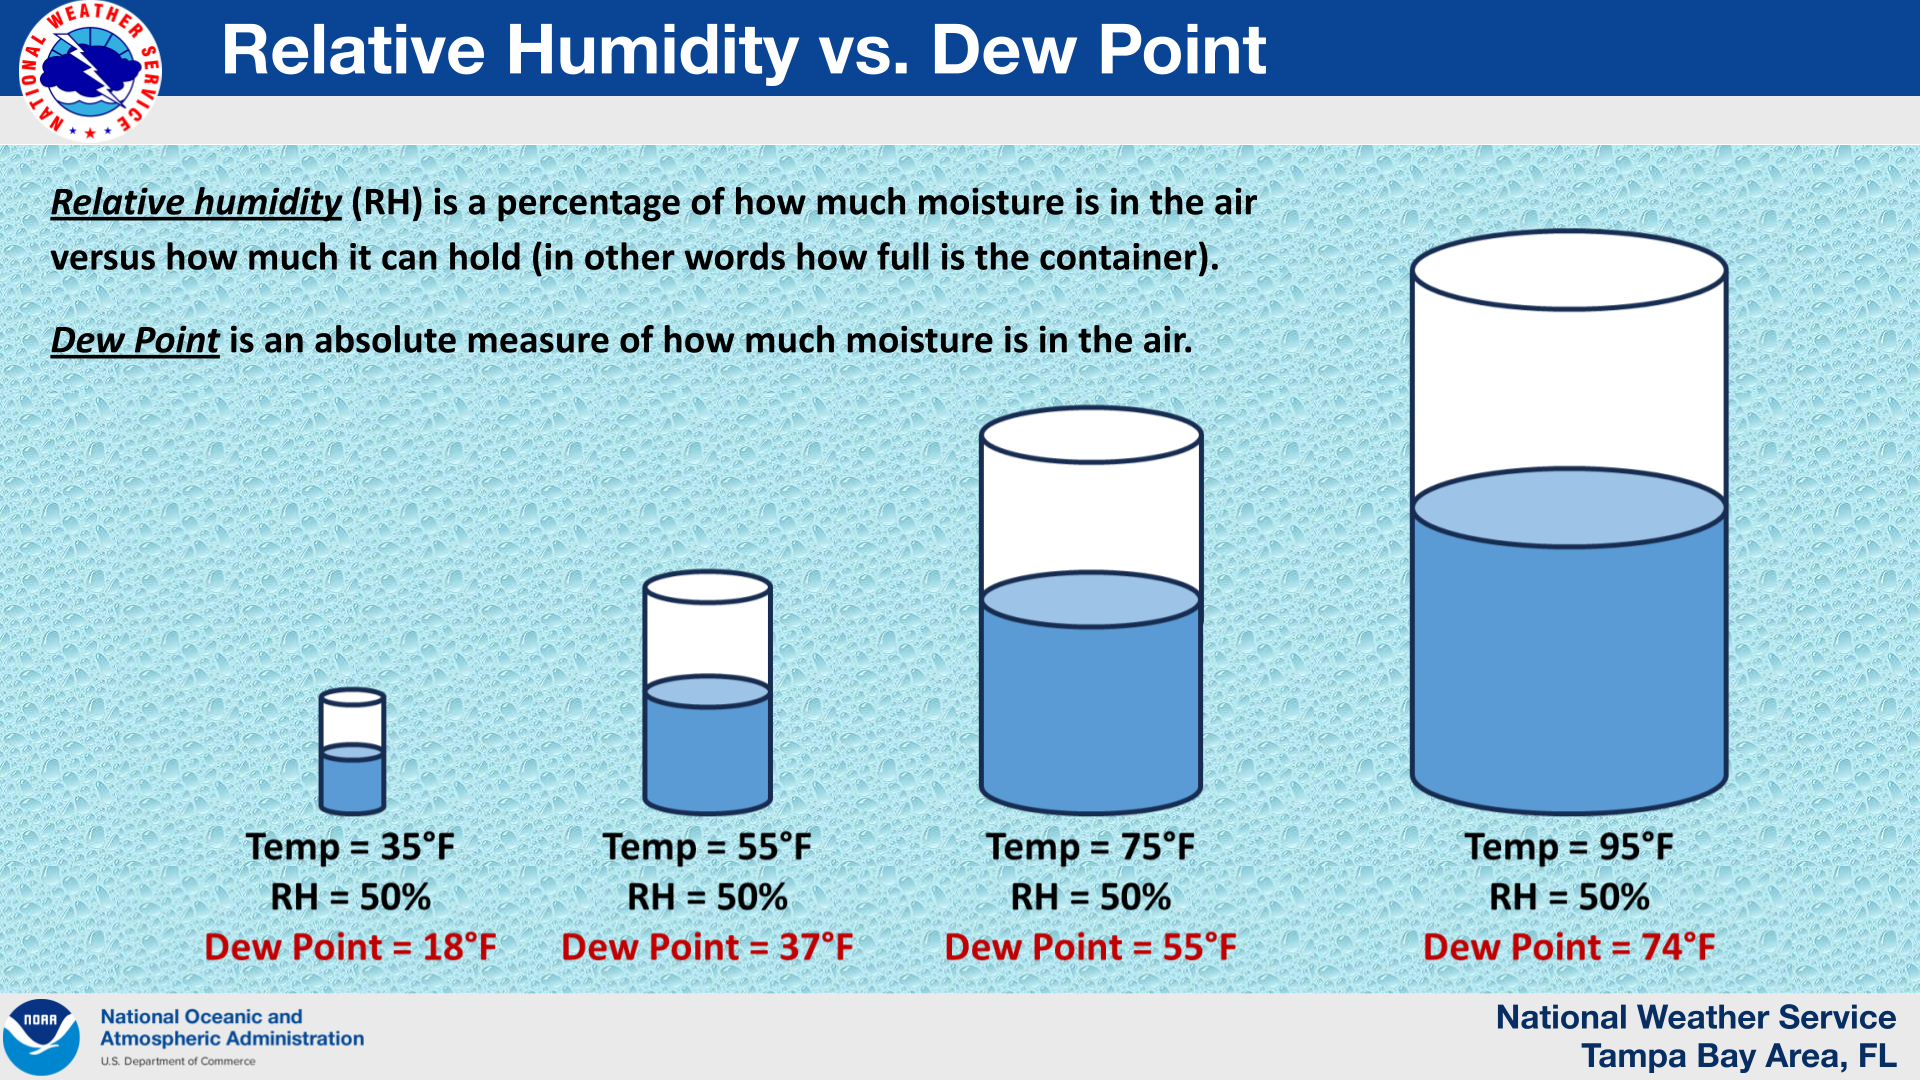 Relative Humidity versus Dew Point graphic